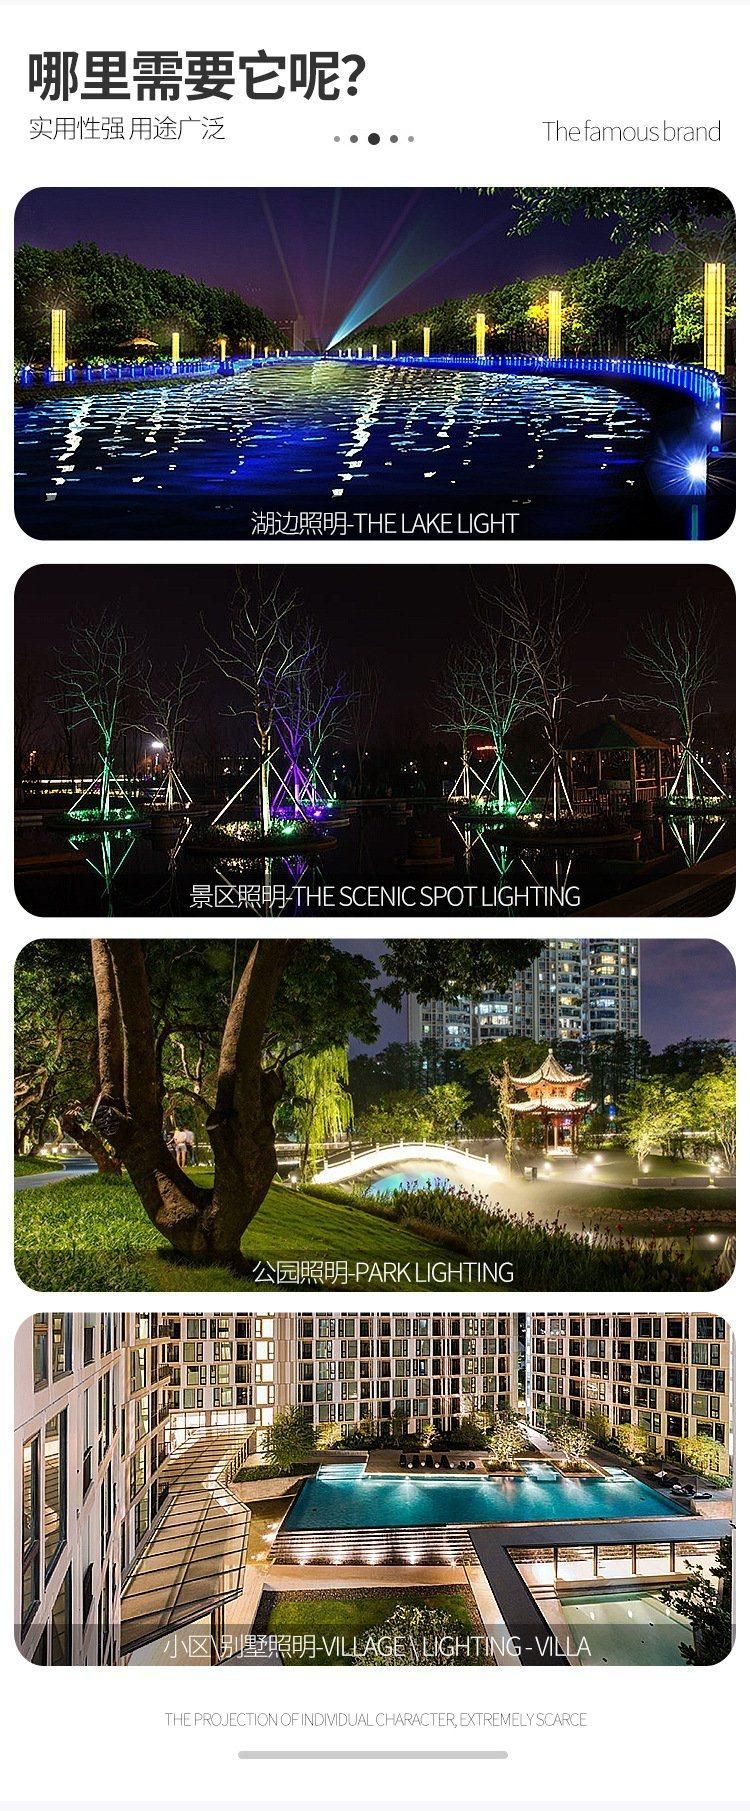 RGB DMX512 Power 12W DC24V Landscape Lights with Shading Cover LED Flood Light for Outdoor Building Garden